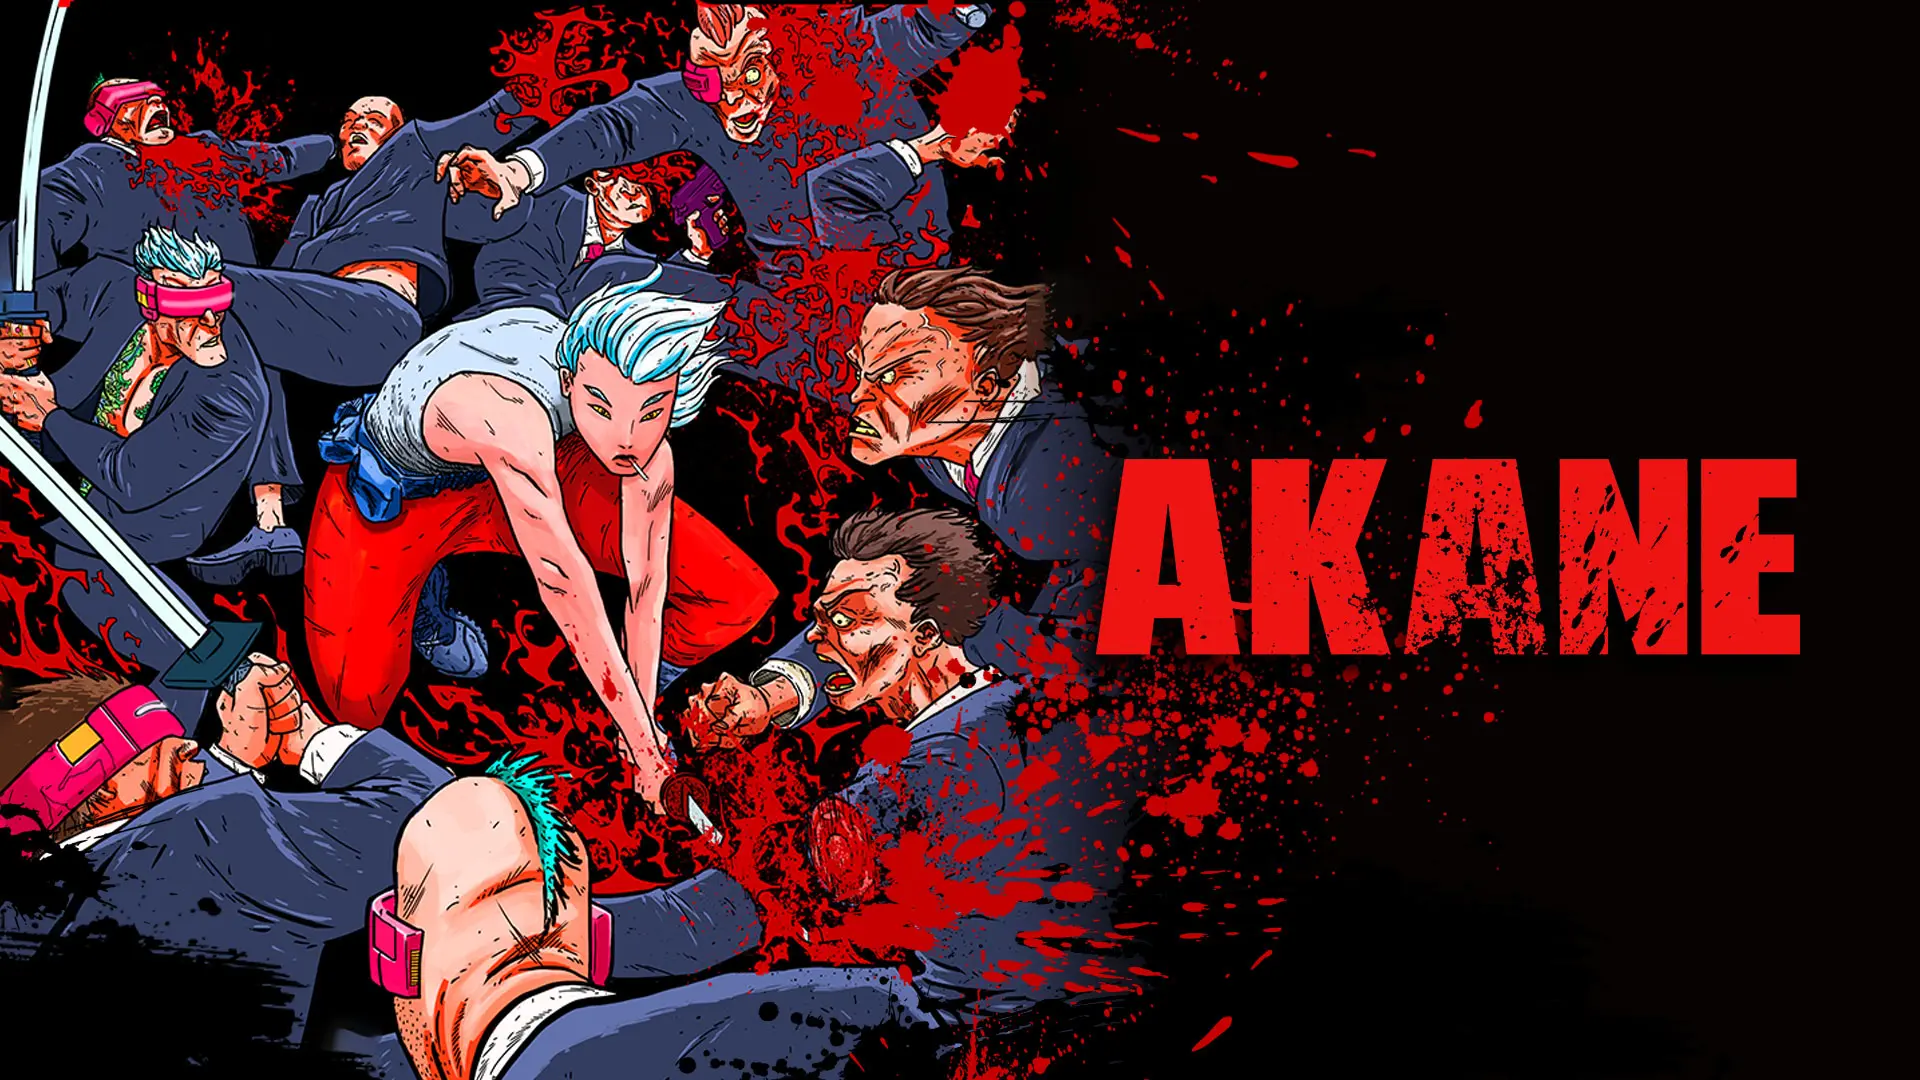 Akane game poster